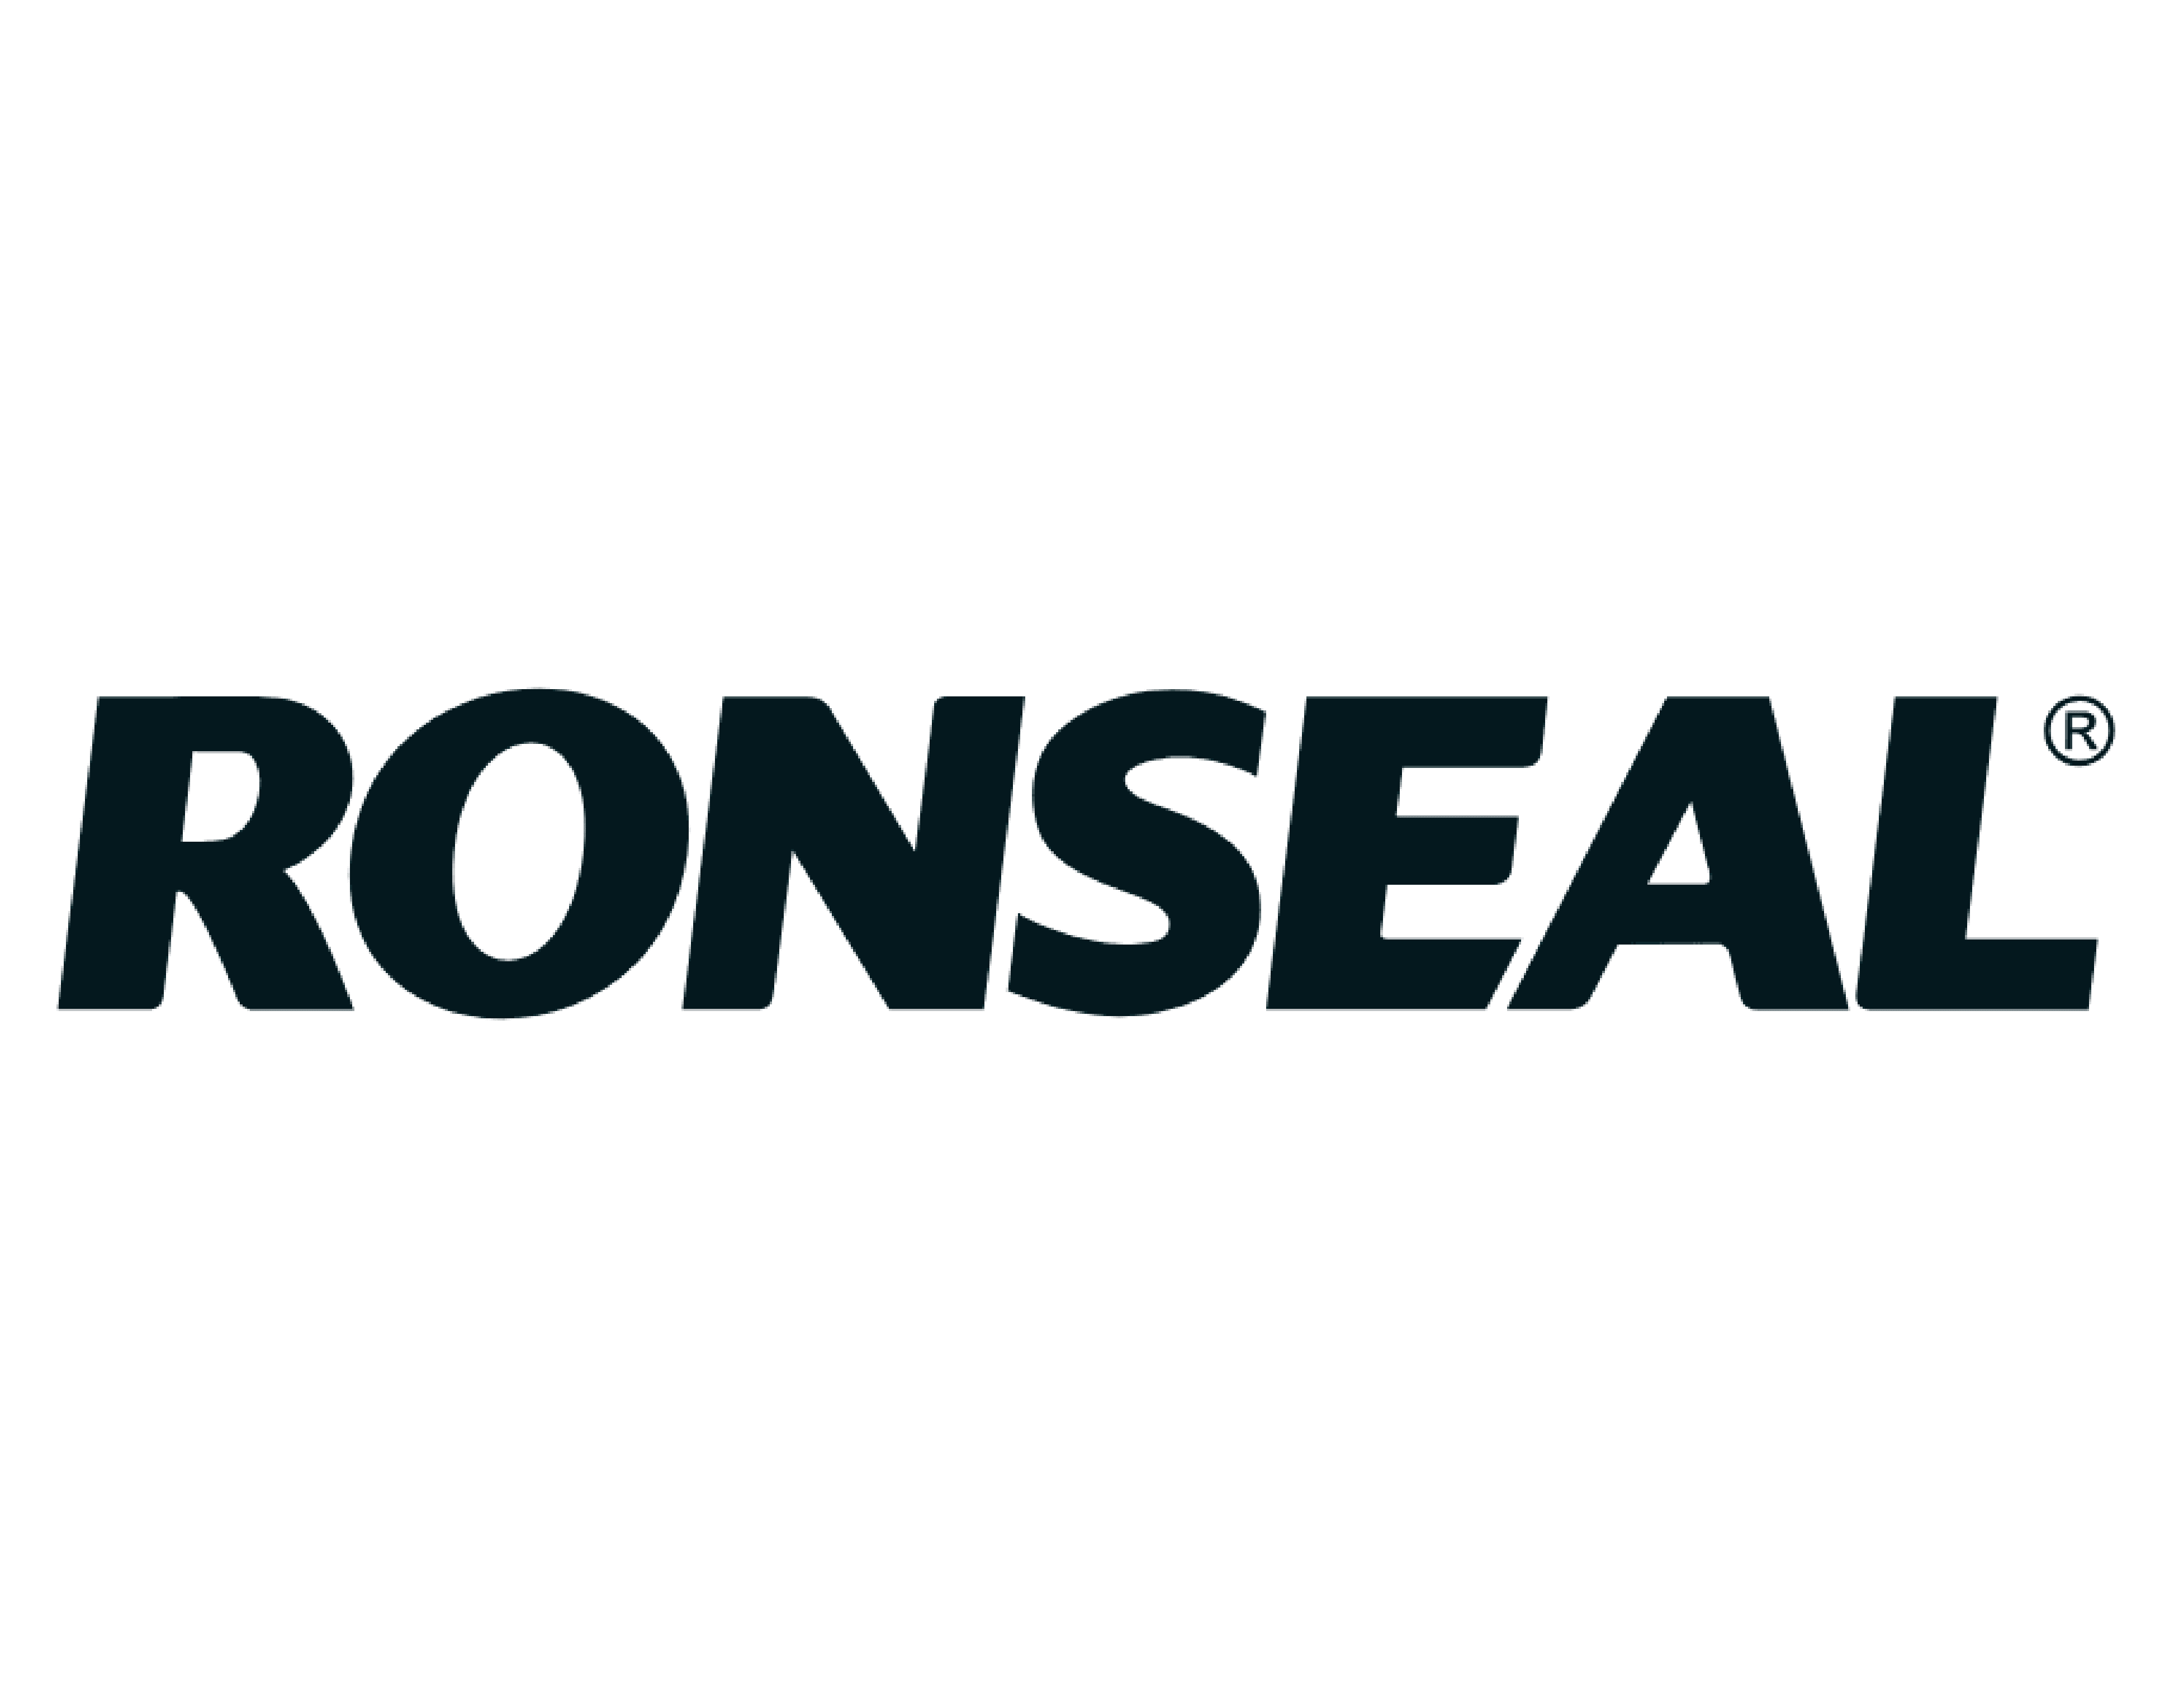 Ronseal Logo Restorate Brands